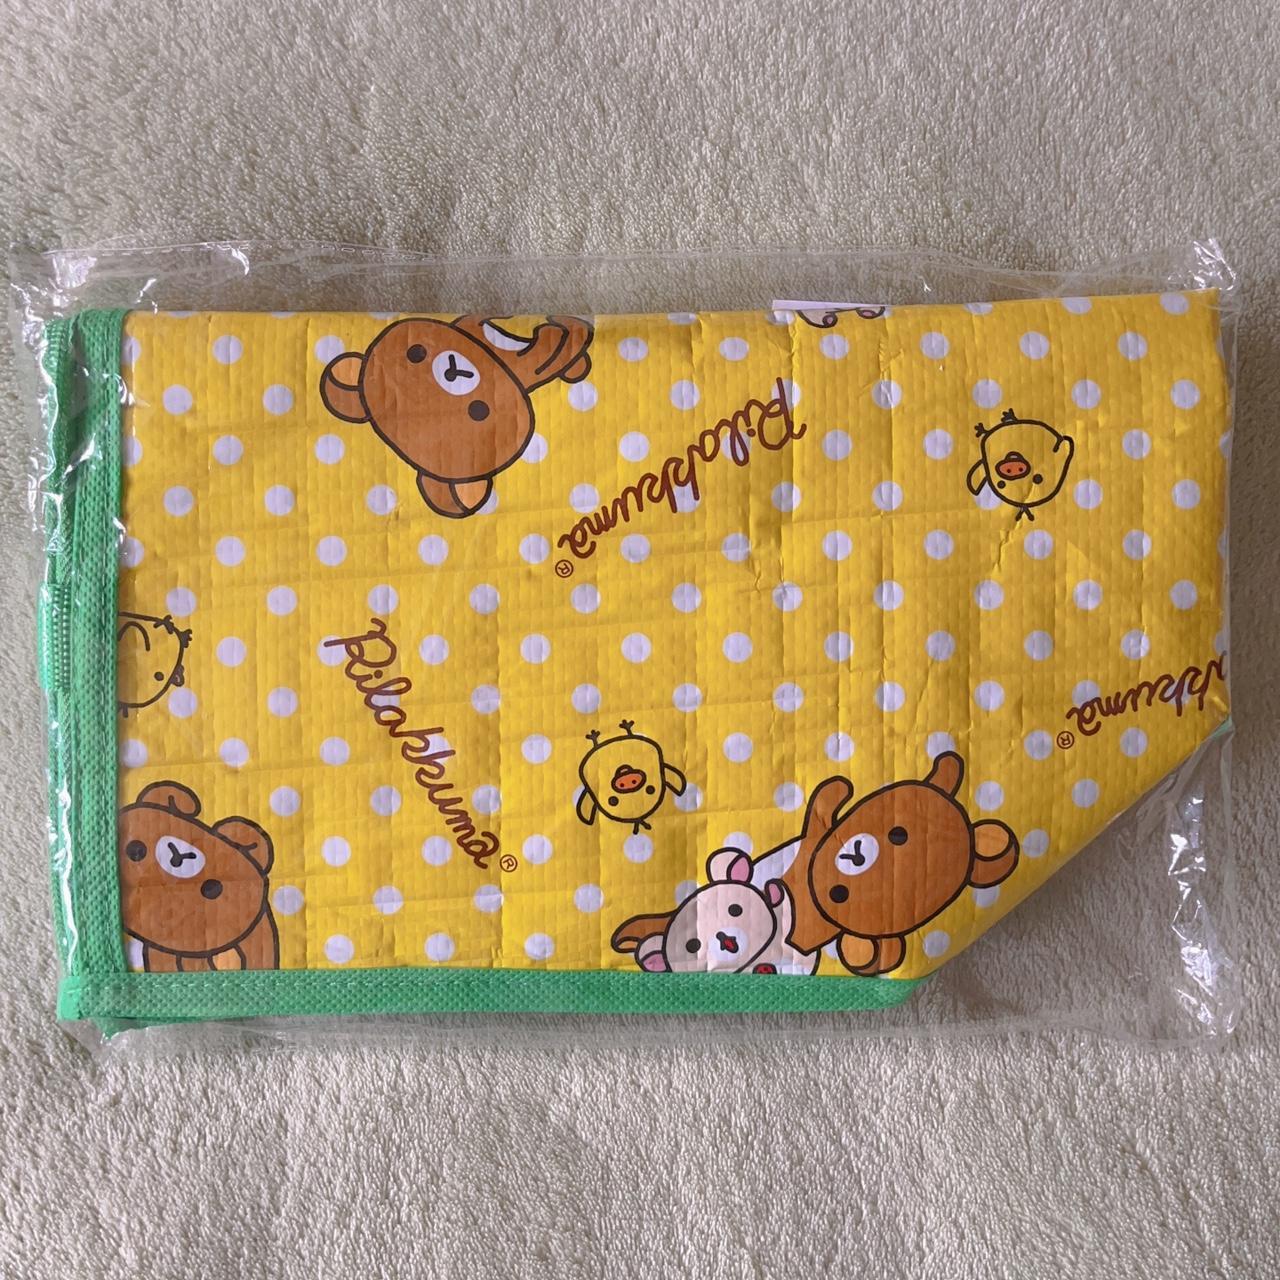 RARE Rilakkuma Tote Bag From Japan NWT Korilakkuma - Depop